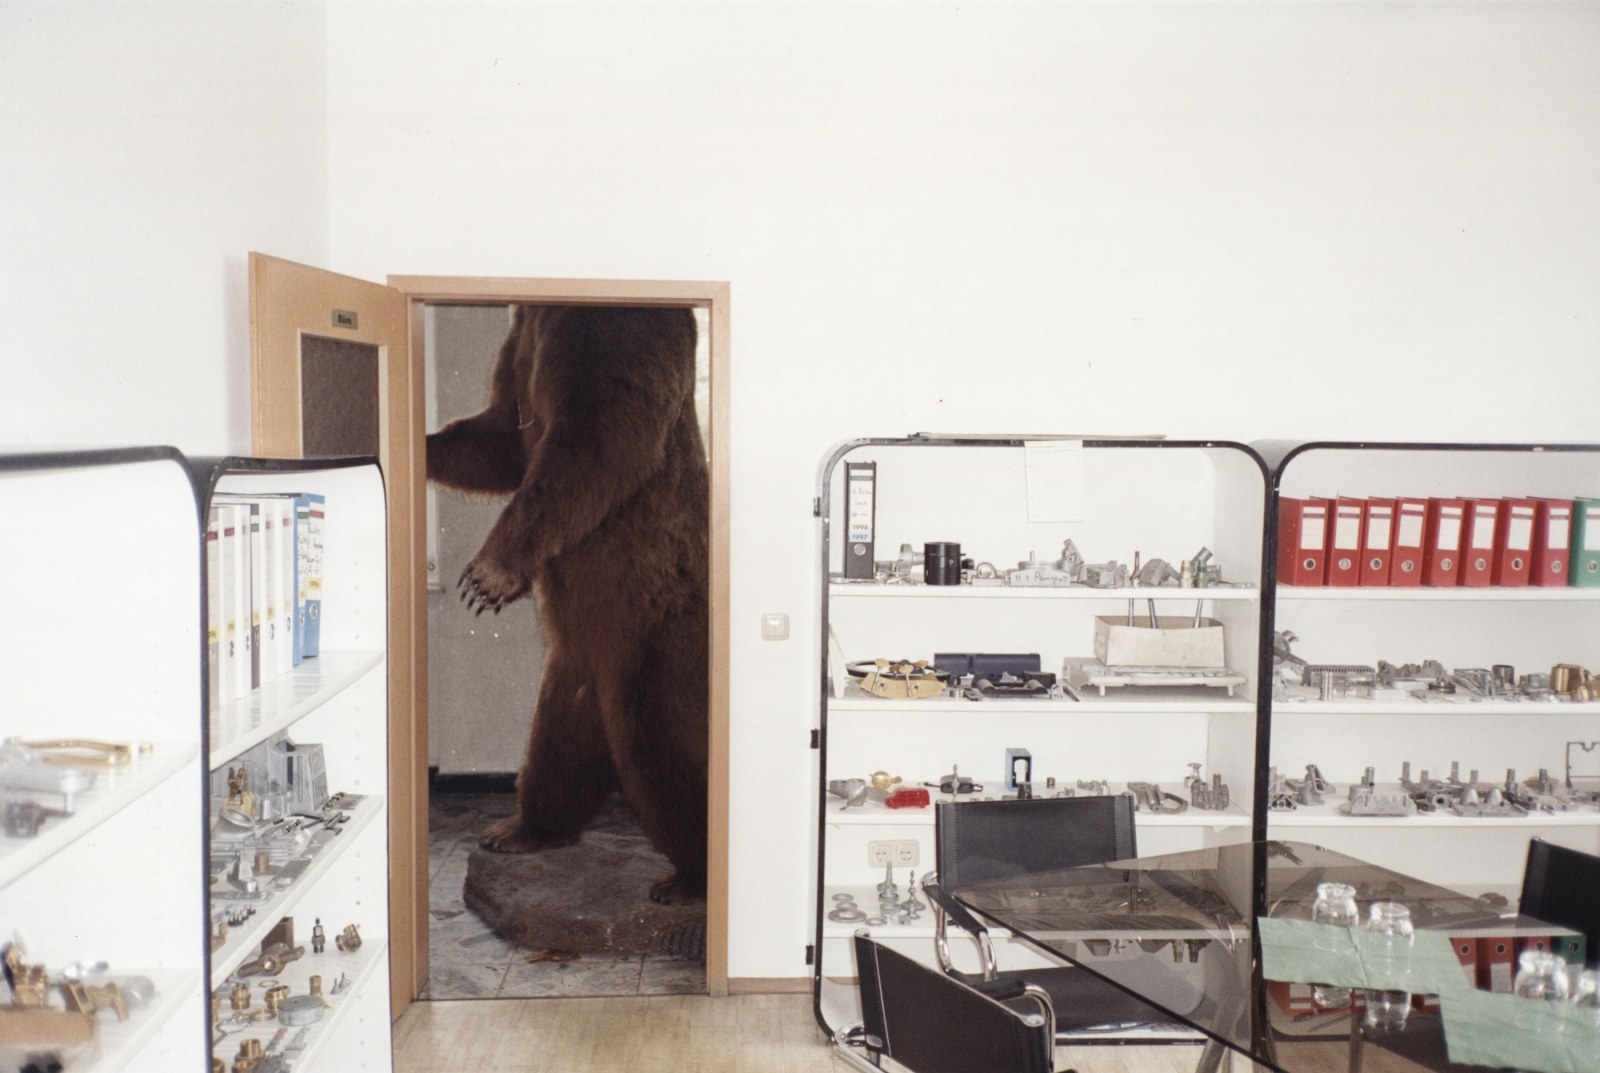 JUERGEN TELLER, Brown Bear, Bubenreuth, Germany, 2002